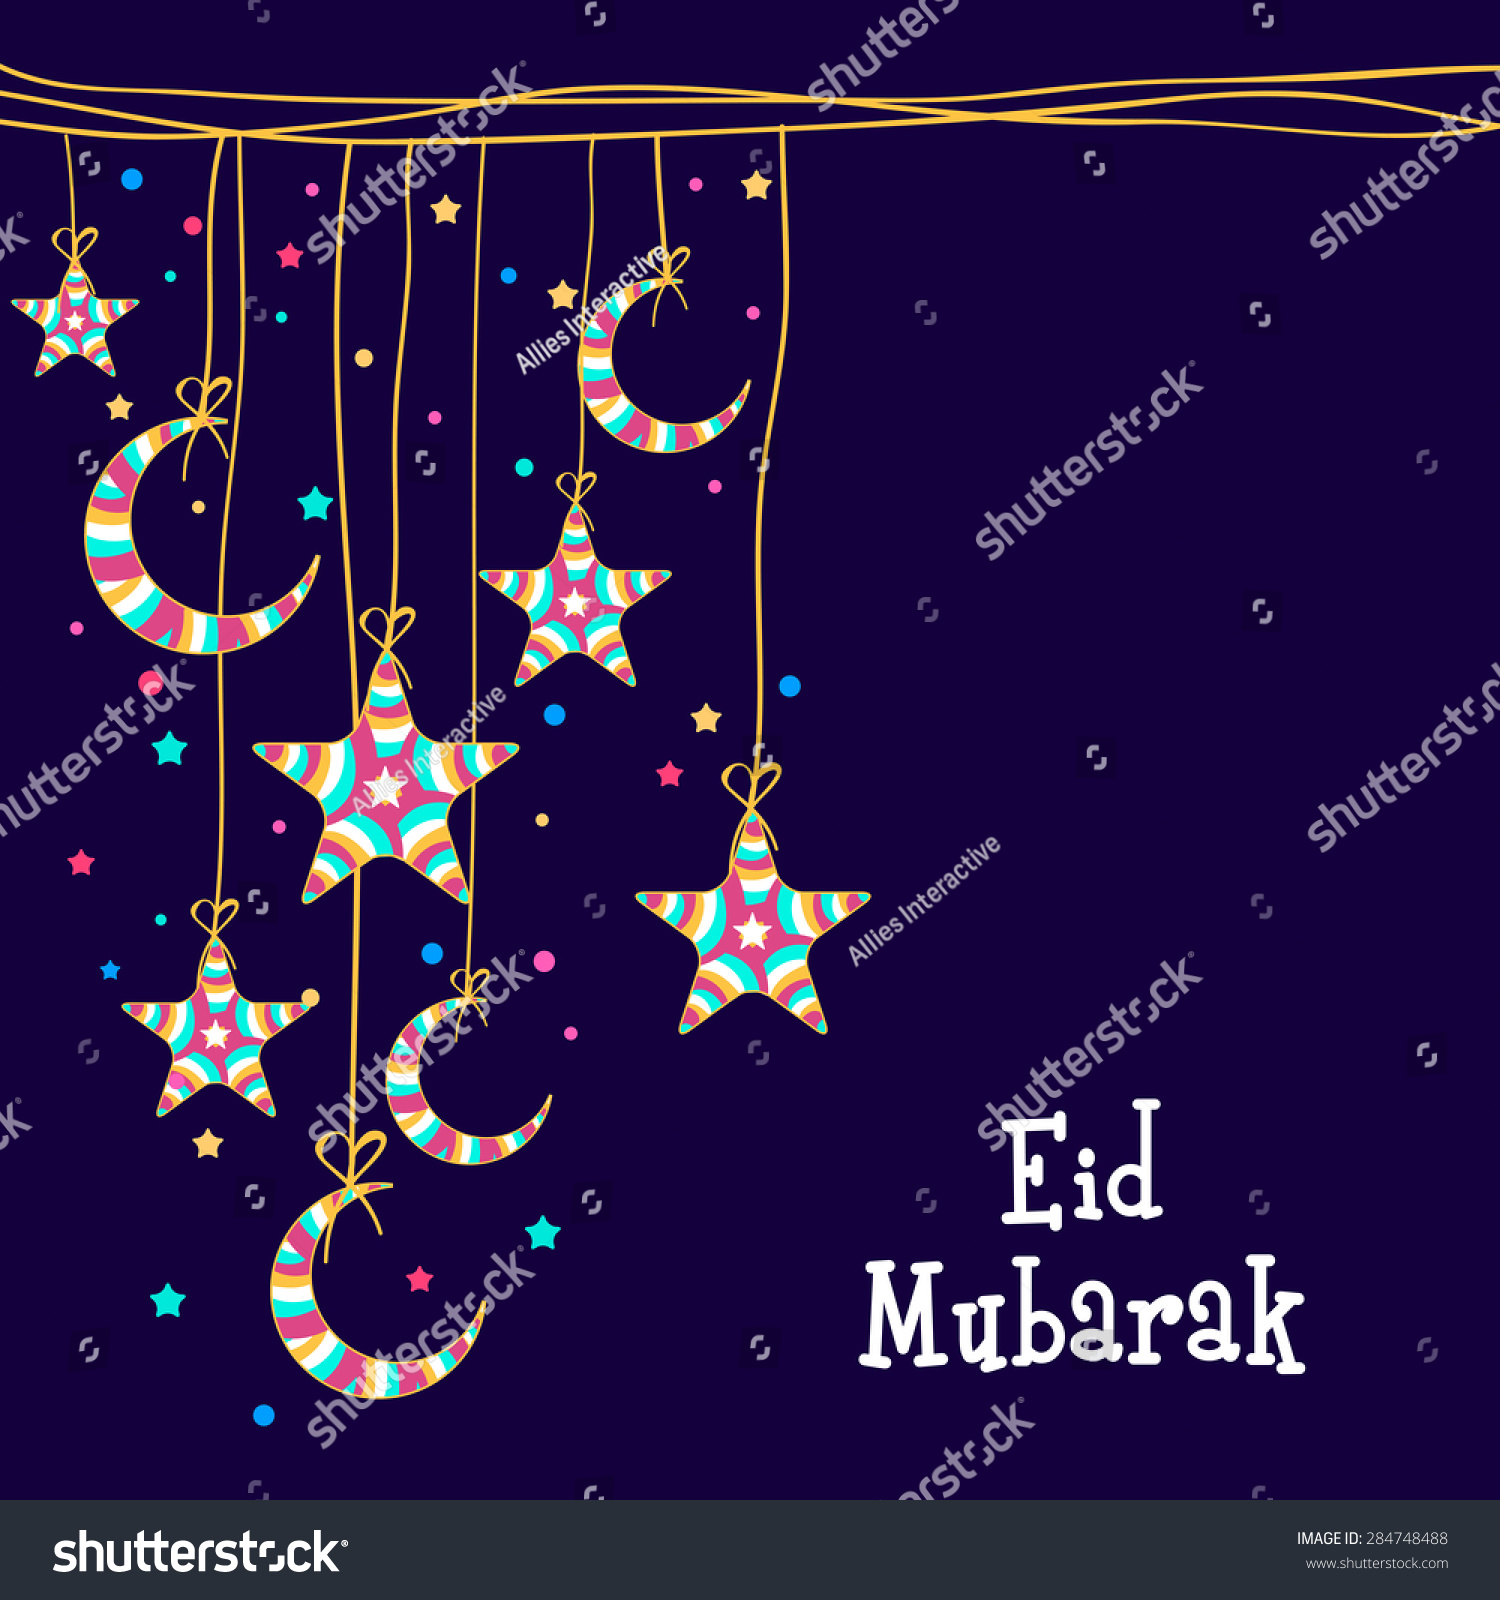 Muslim Community Festival Eid Mubarak Celebration Stock 